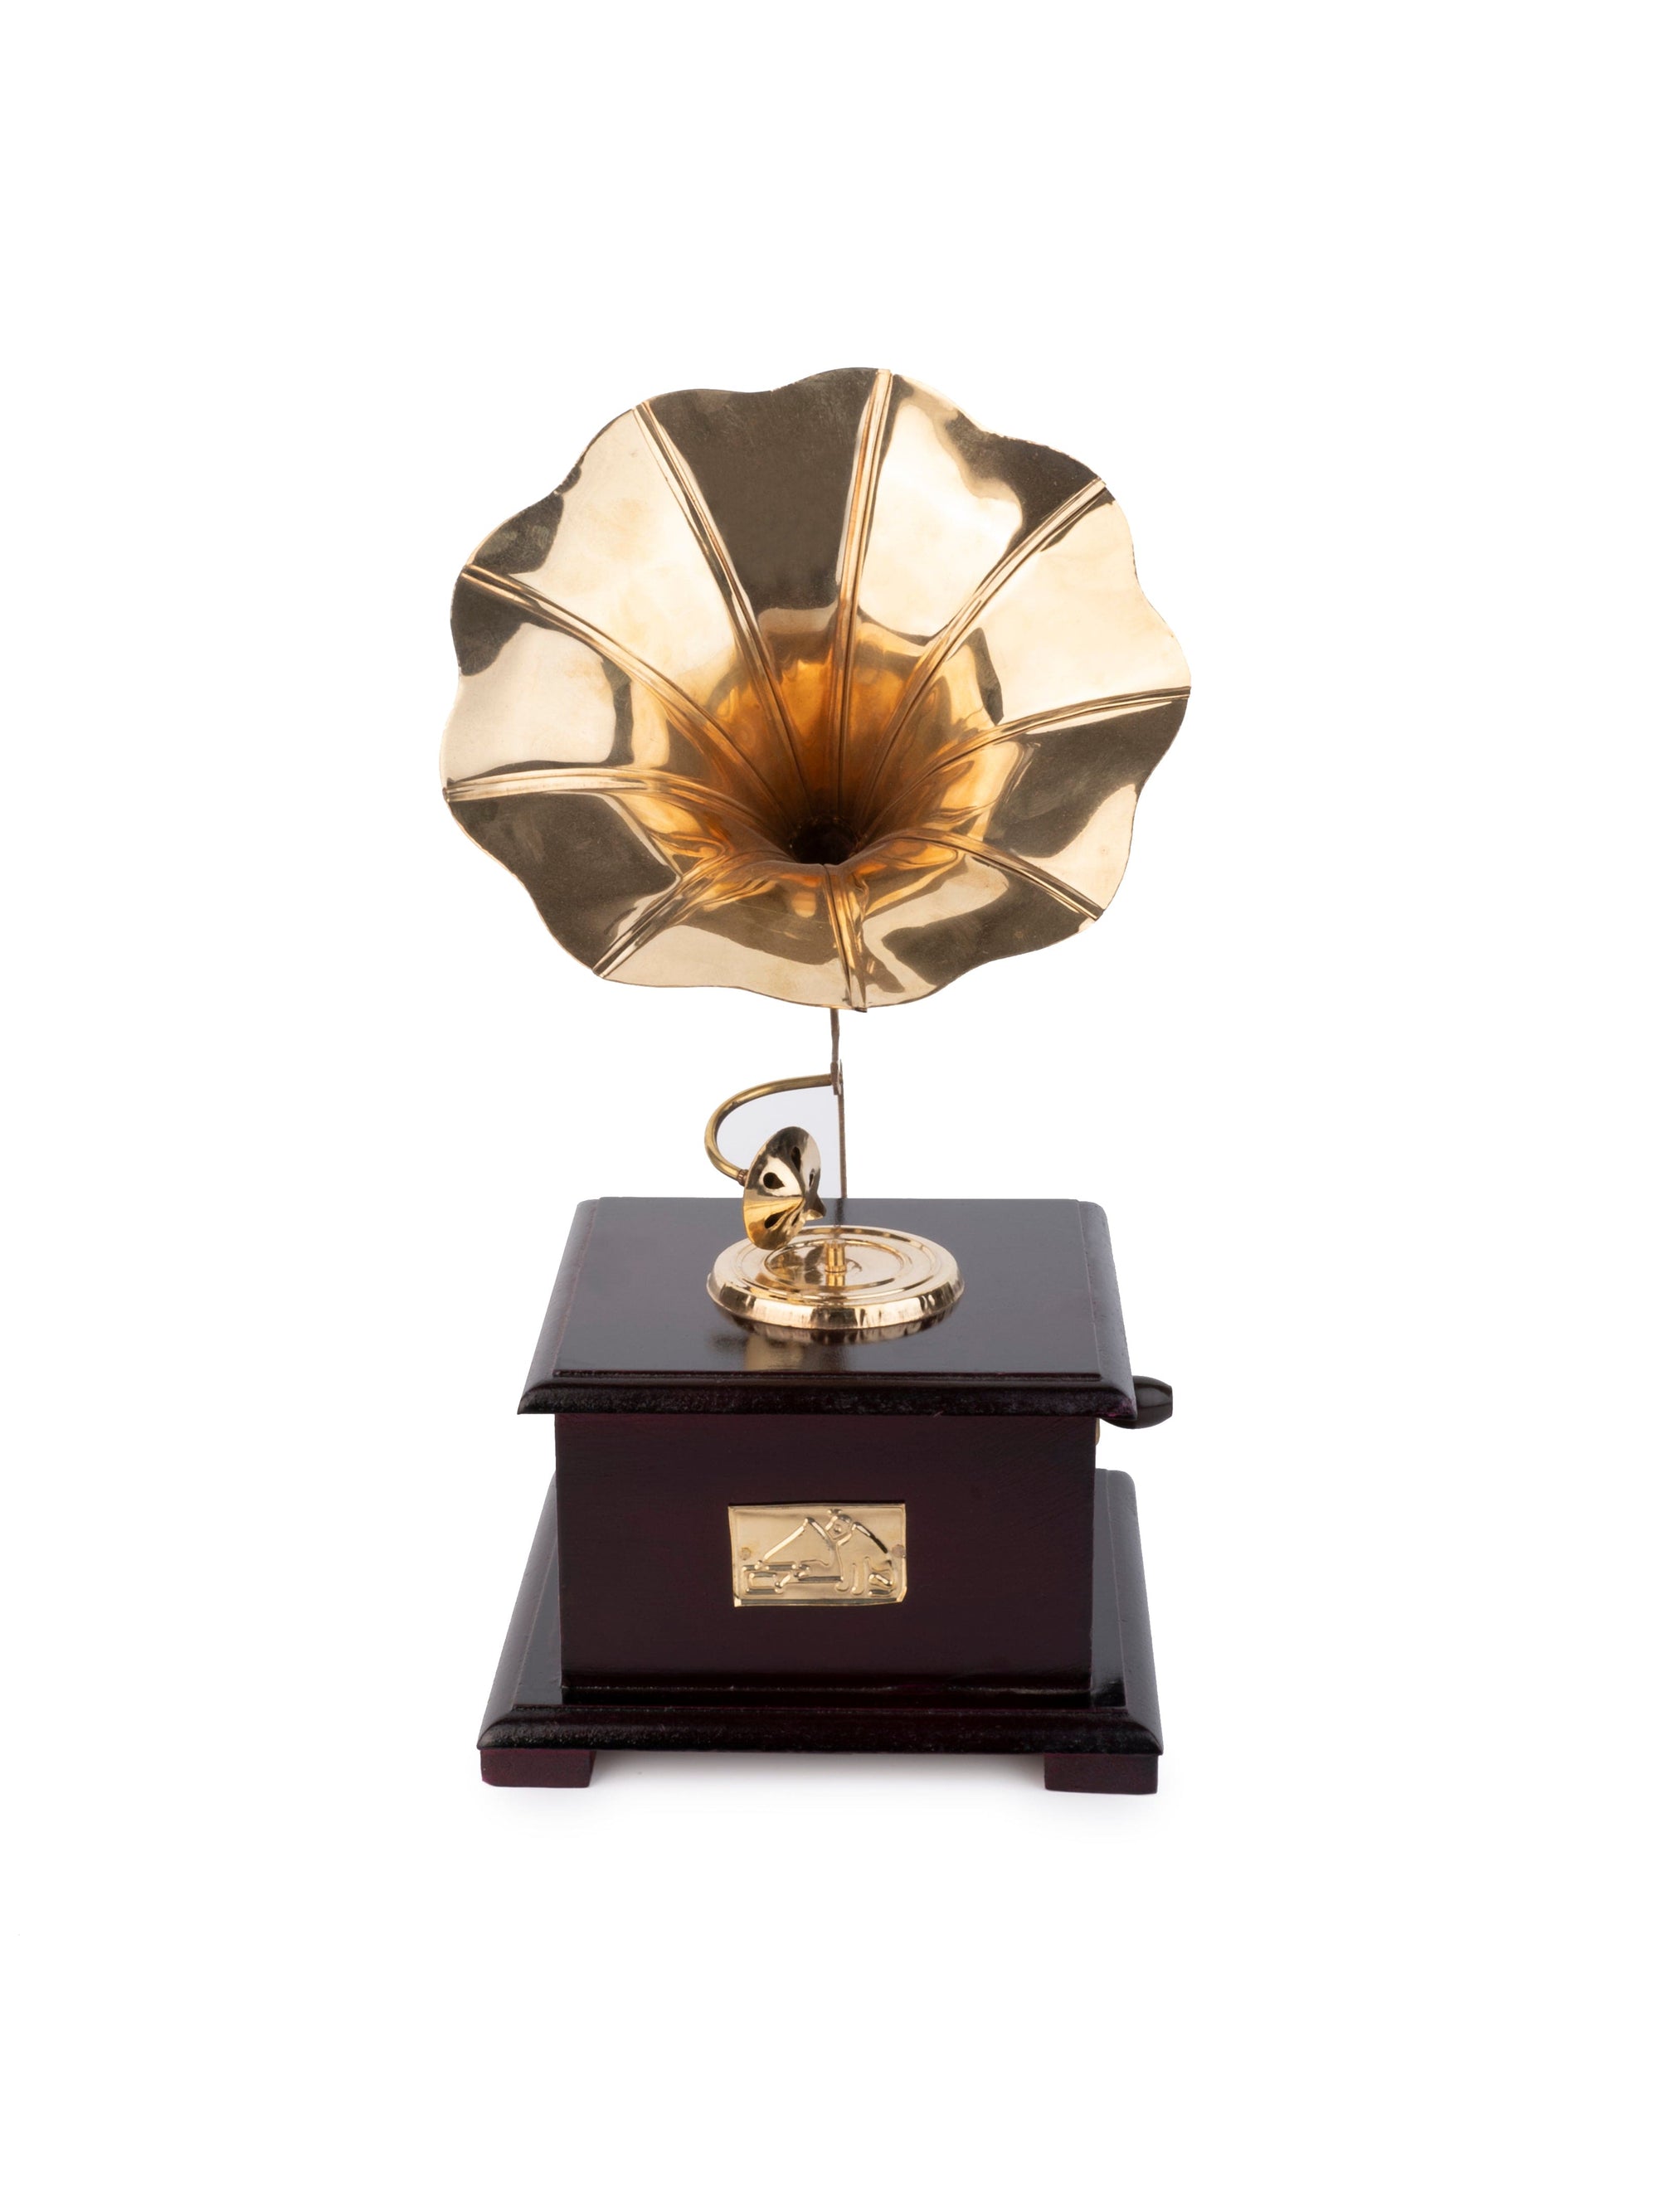 Antique Golden Gramophone Decorative Showpiece - 12 inches